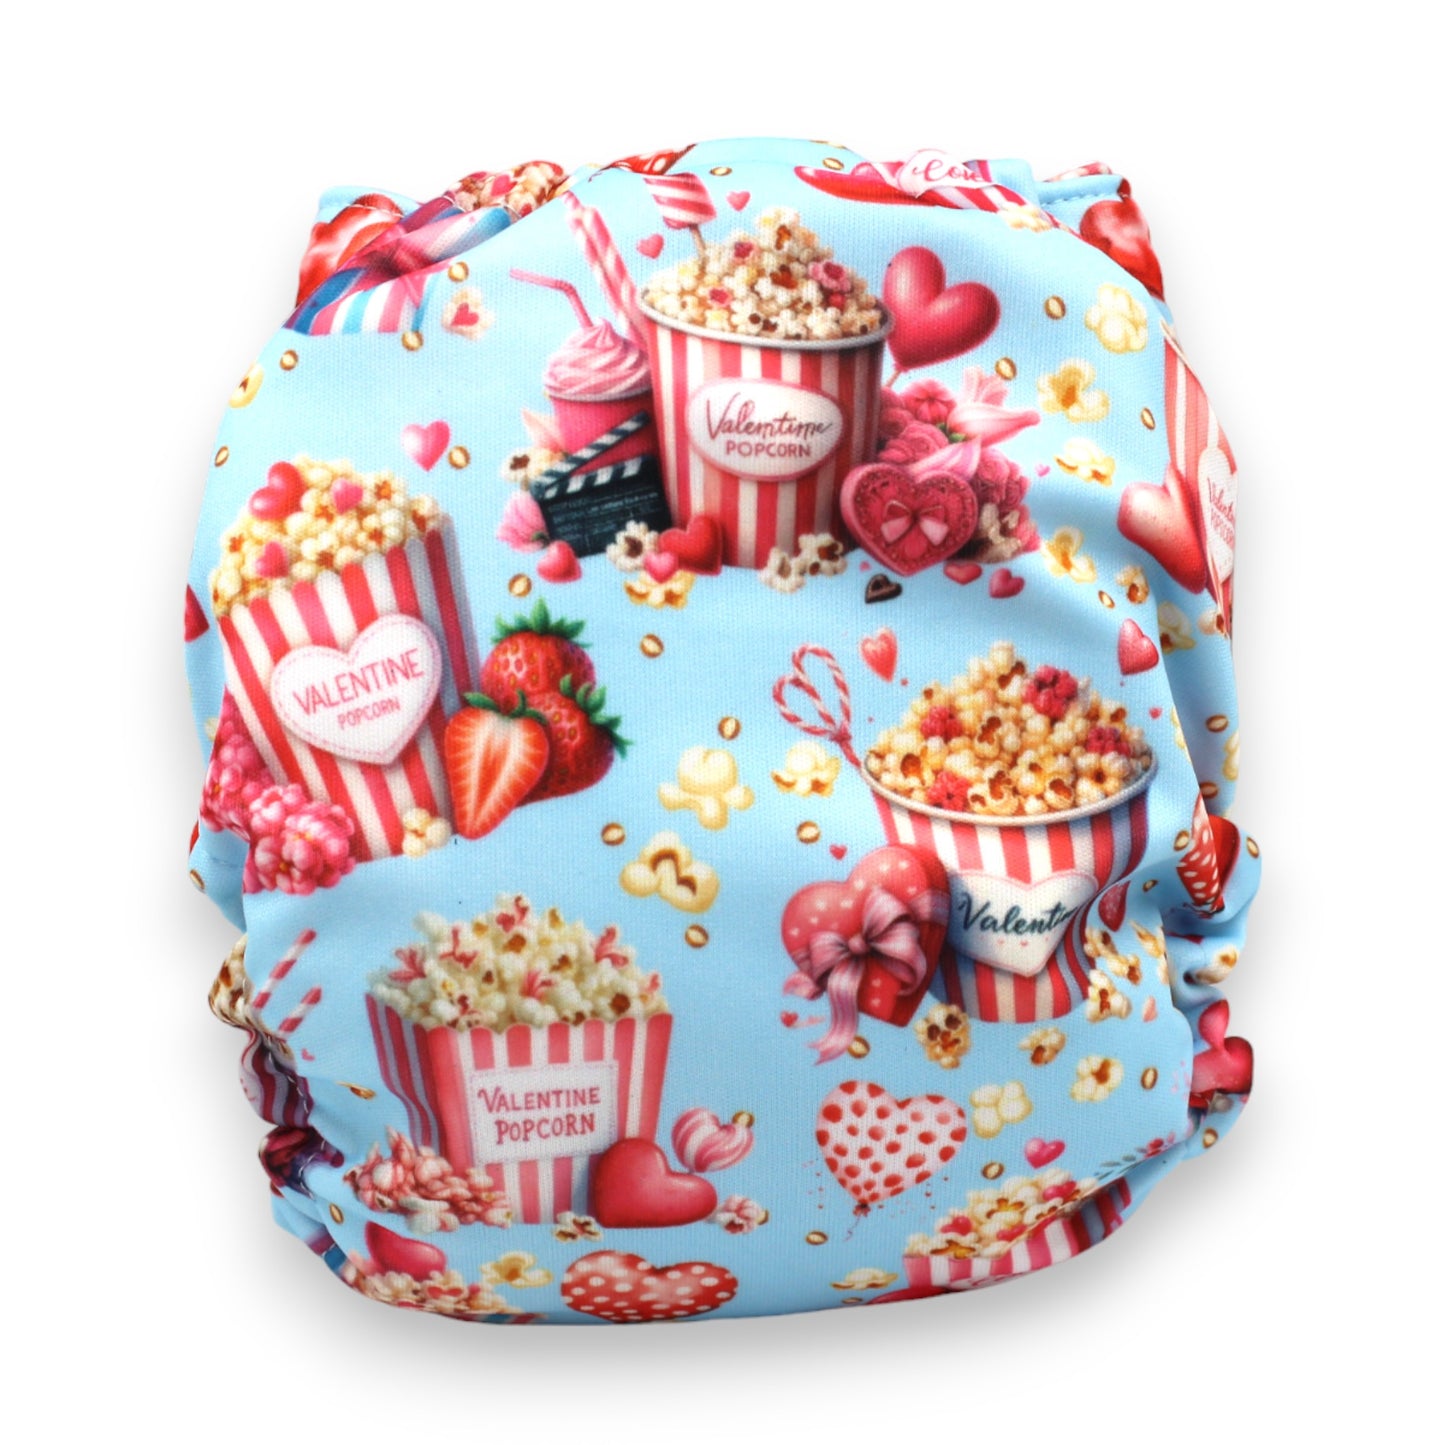 Couches - Valentine Popcorn FP (7375903916169)